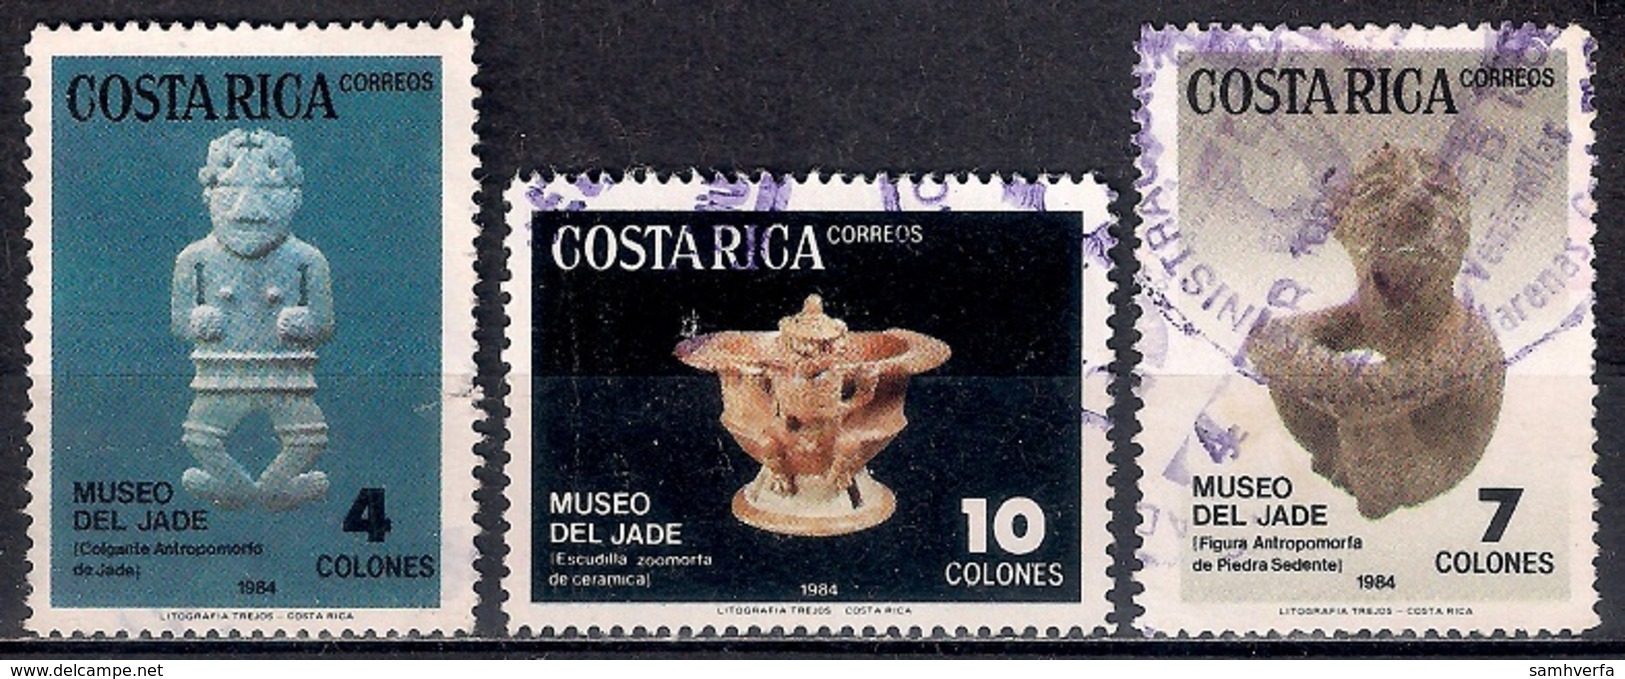 Costa Rica 1984 - Jade Museum Artifacts - Costa Rica